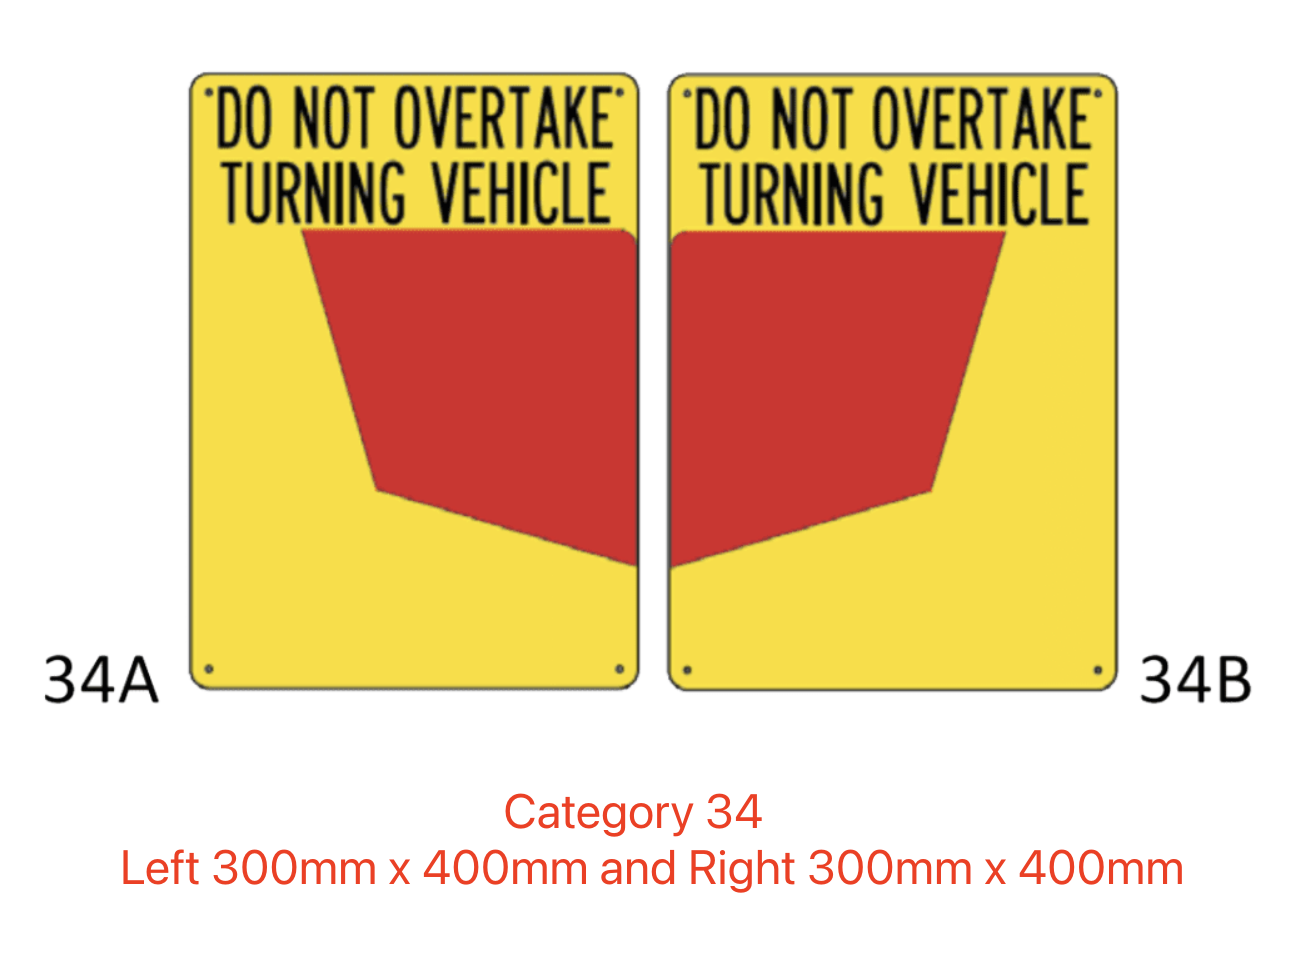 Do Not Overtake Turning Vehicle Sign Category 34